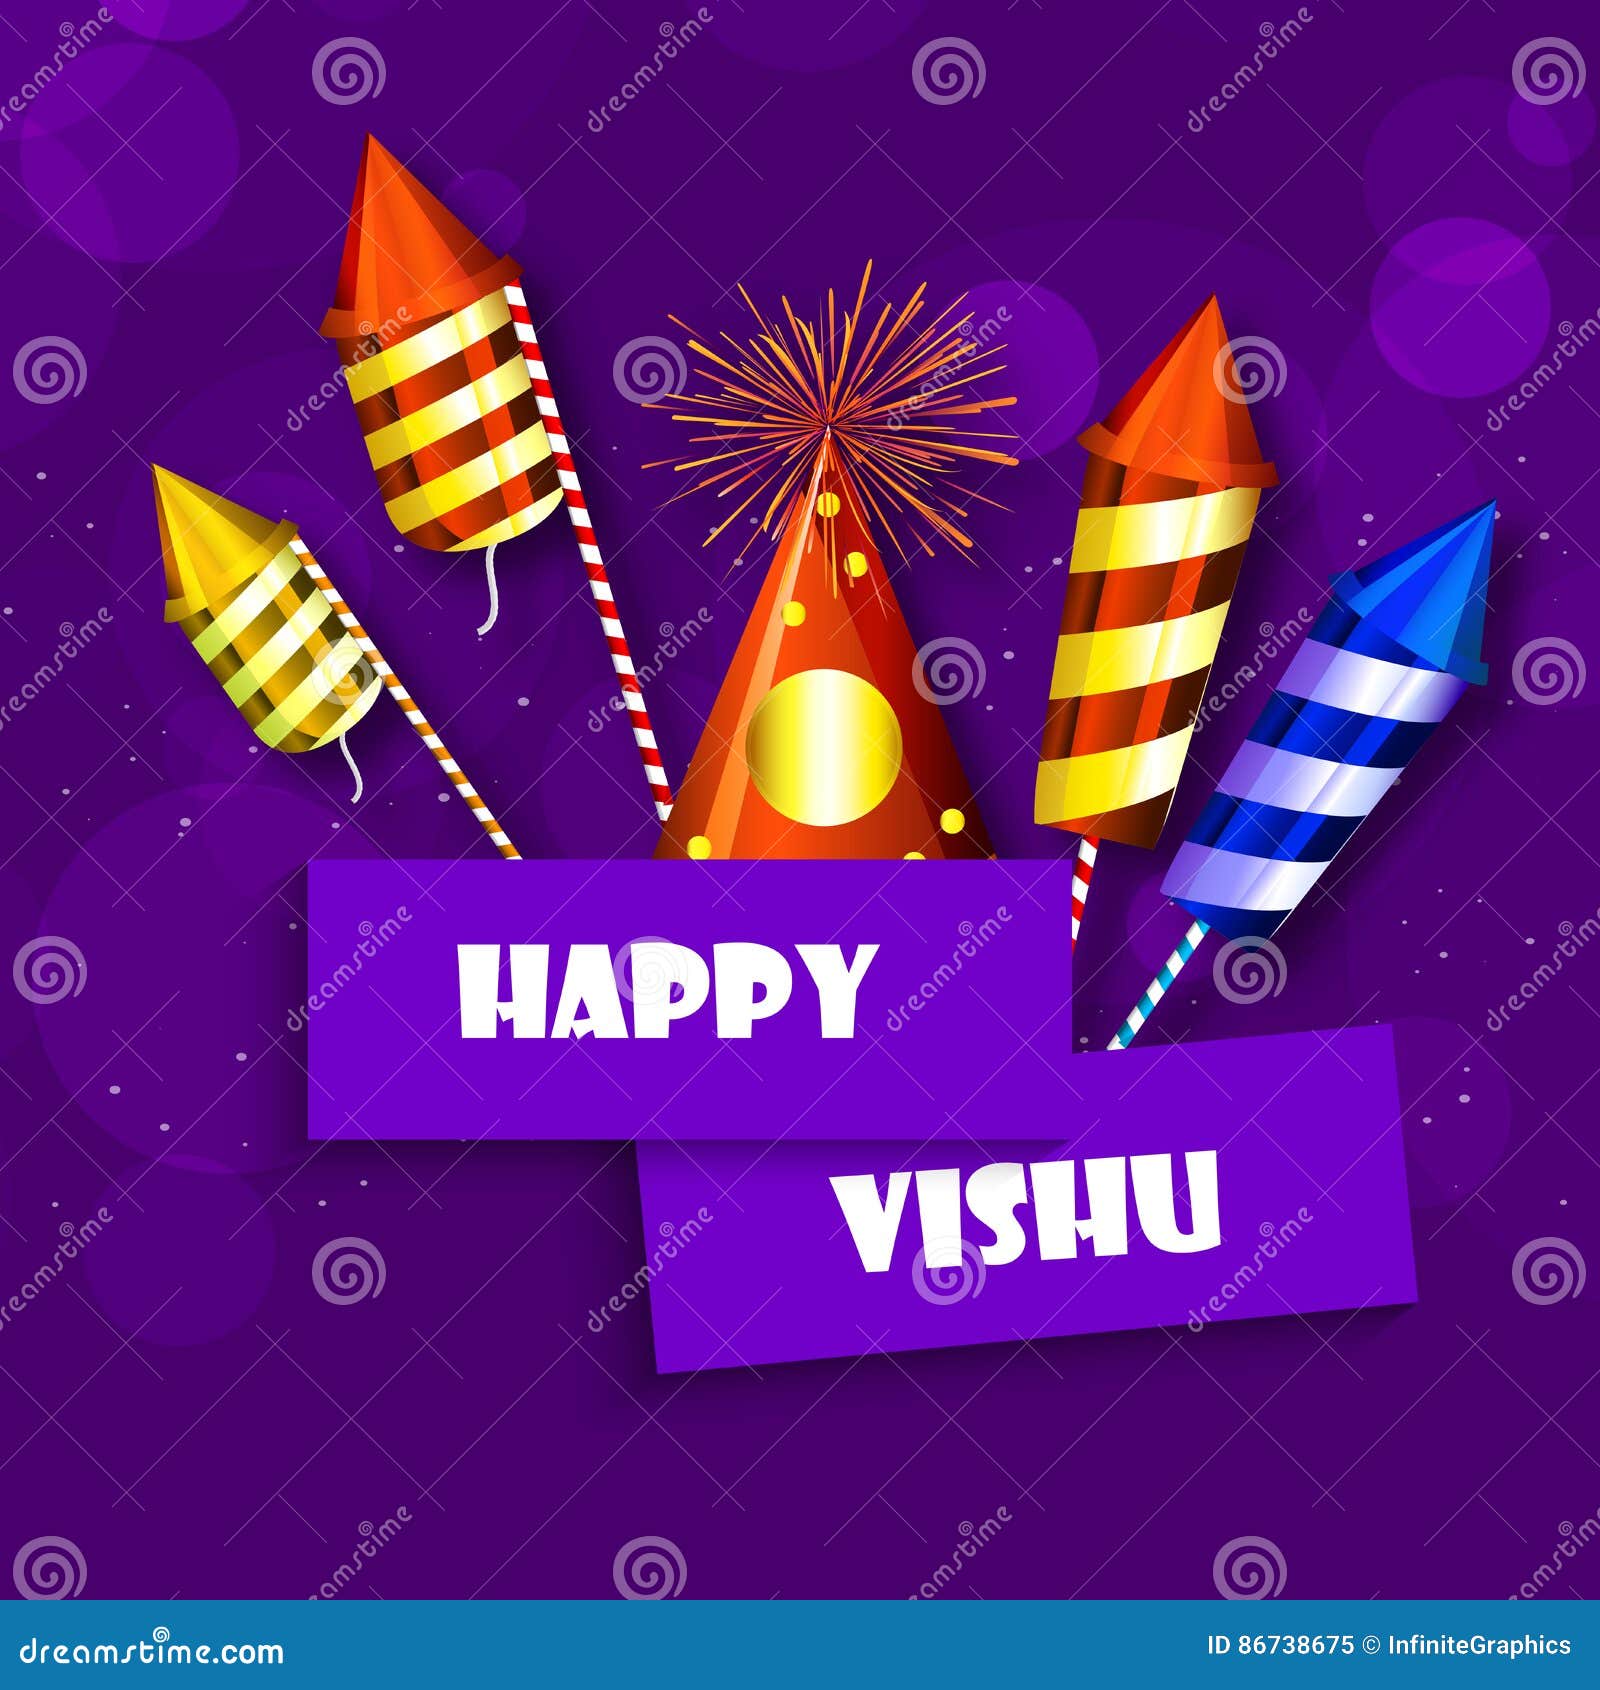 Vishu Background Illustration 86738675 - Megapixl